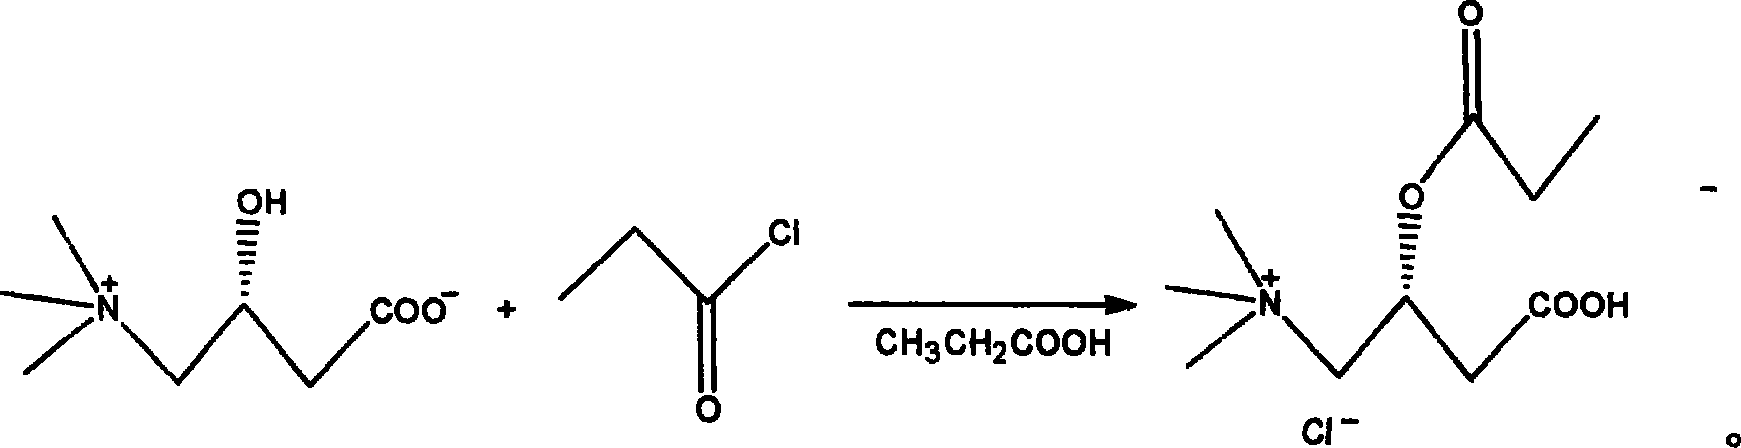 Method for synthesizing propionyl levo-carnitine hydrochlorate